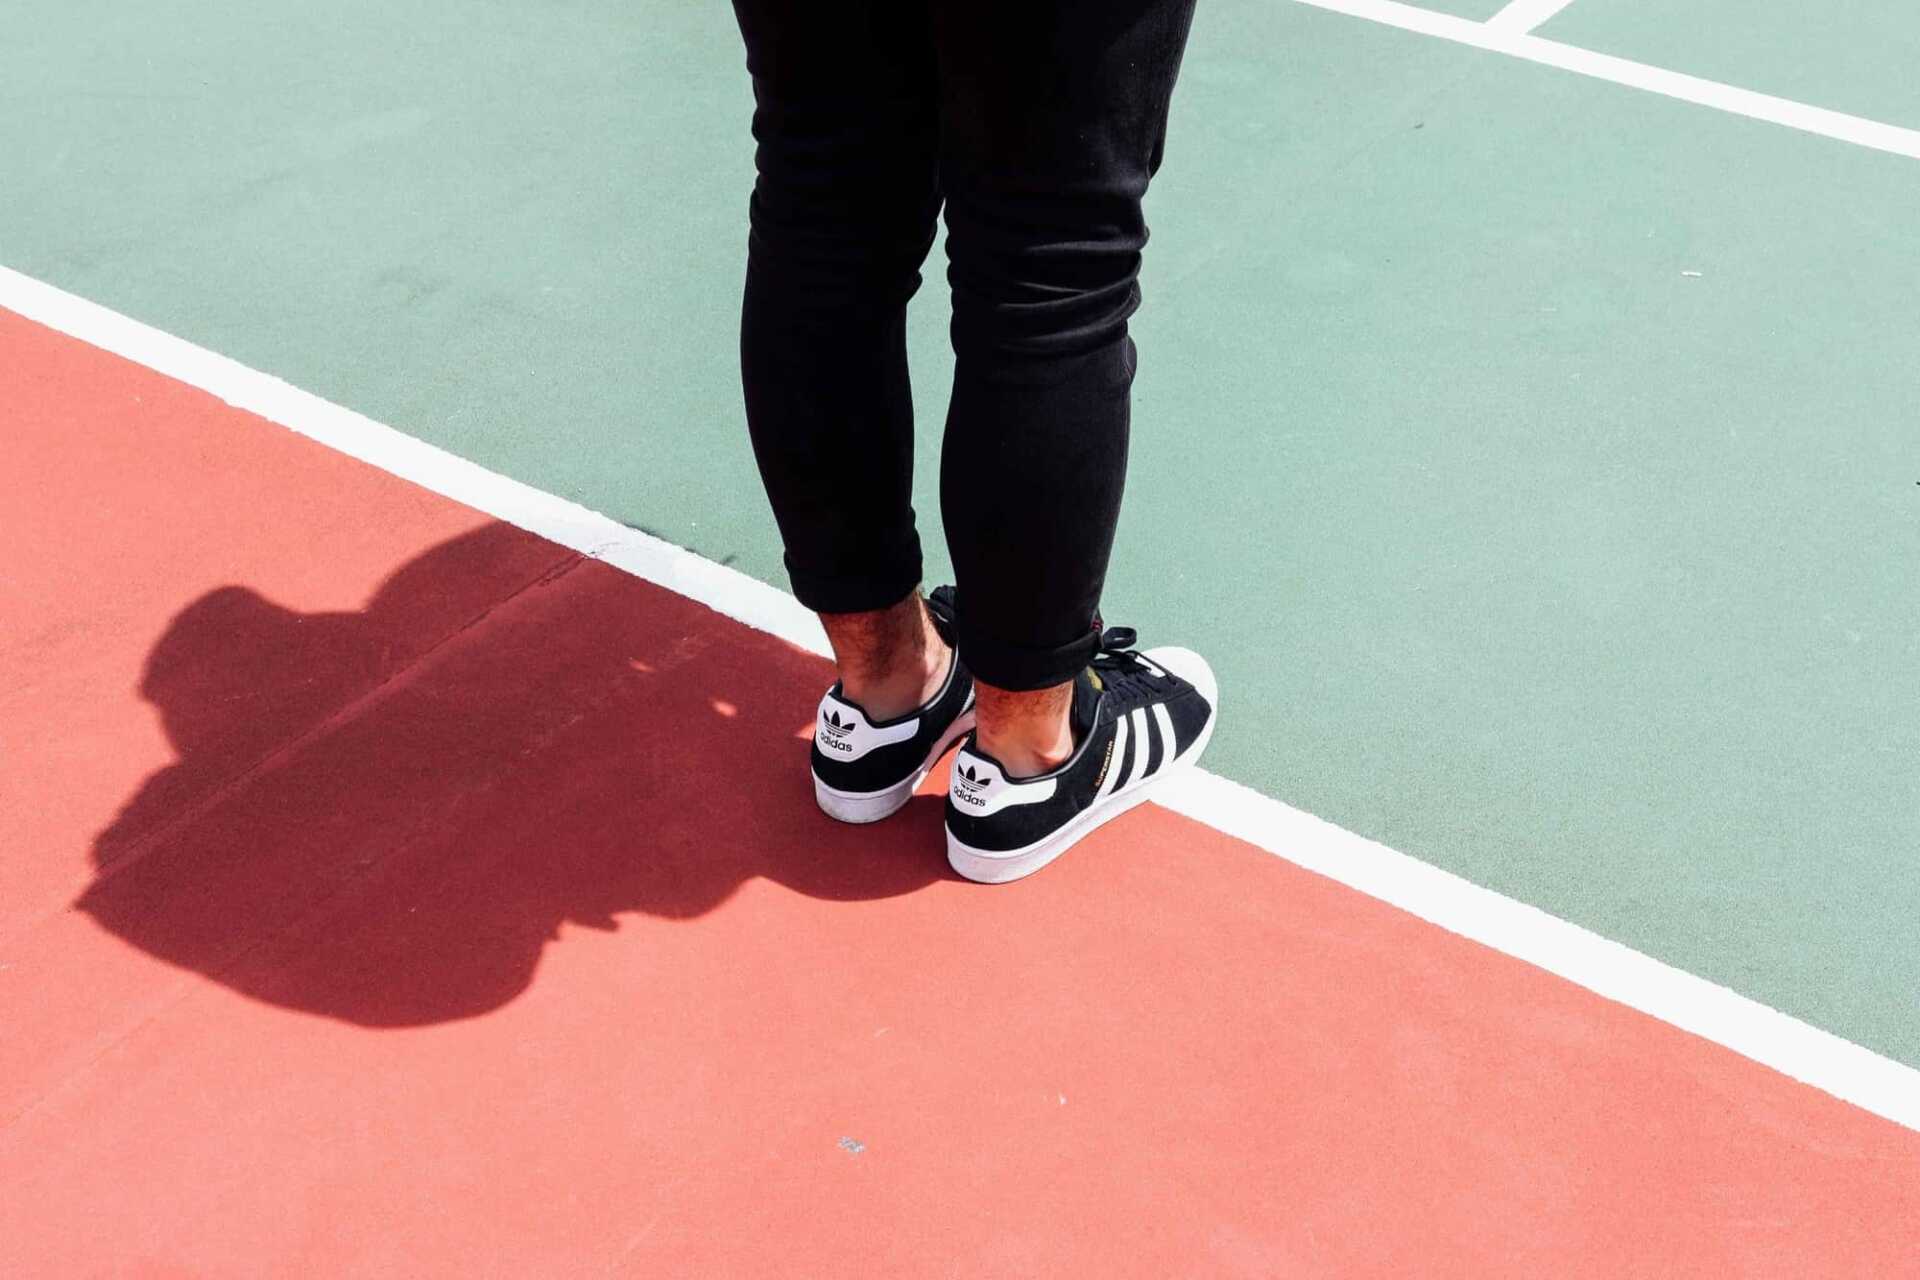 legs standing on a tennis court